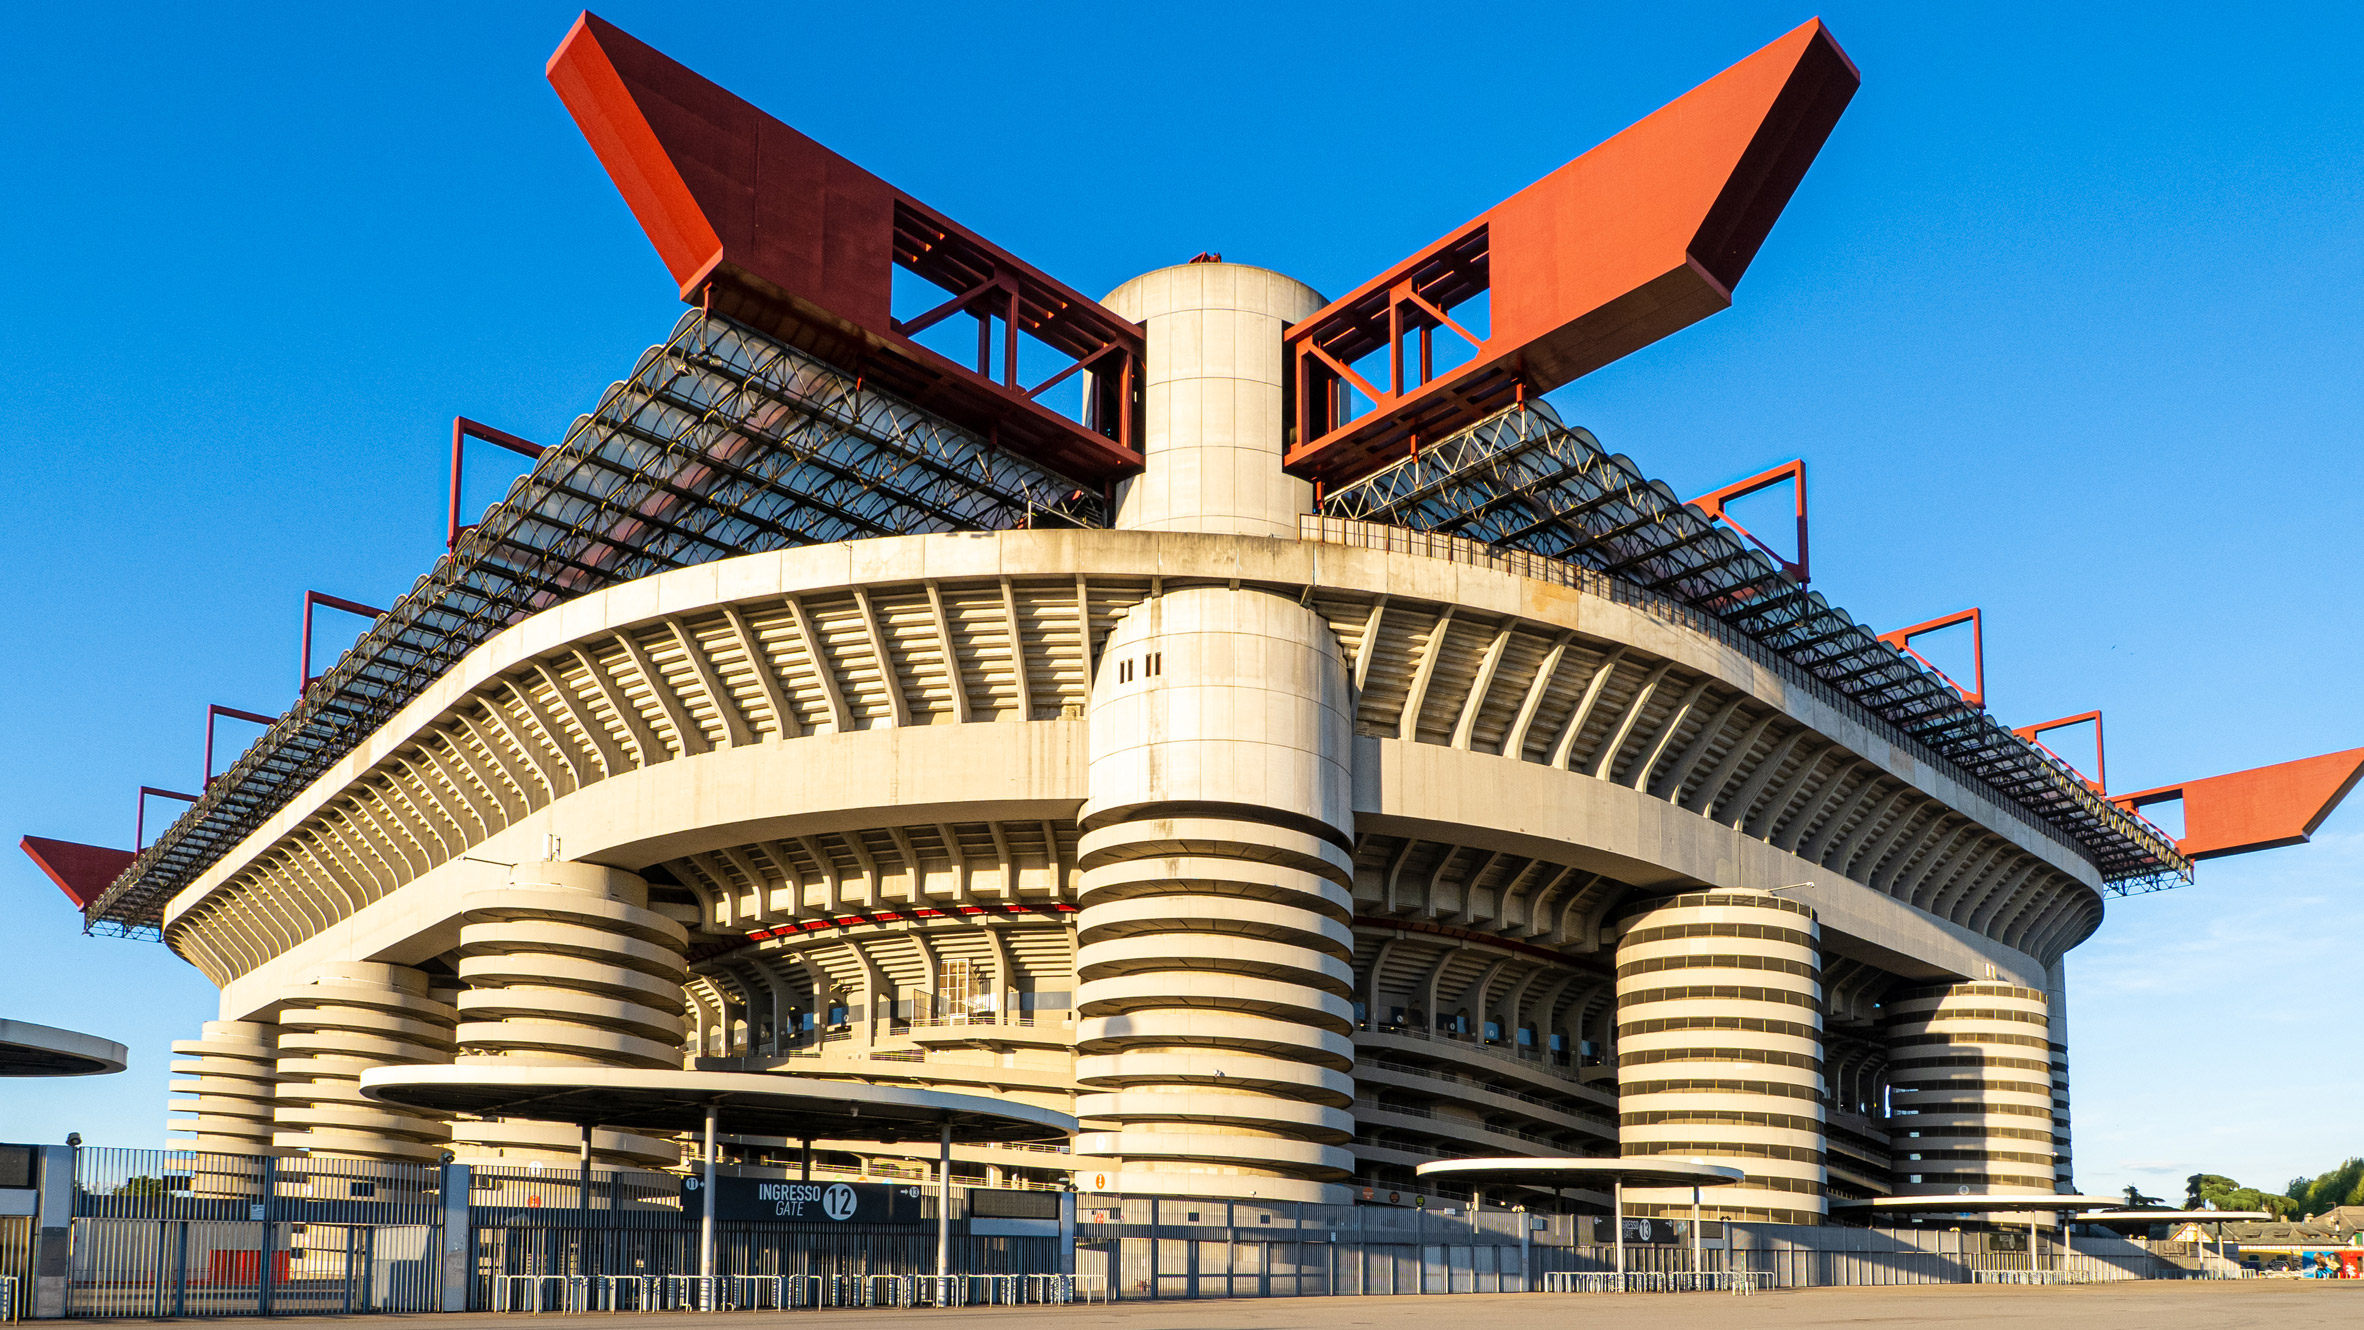 Exterior of the San Siro stadium in Milan